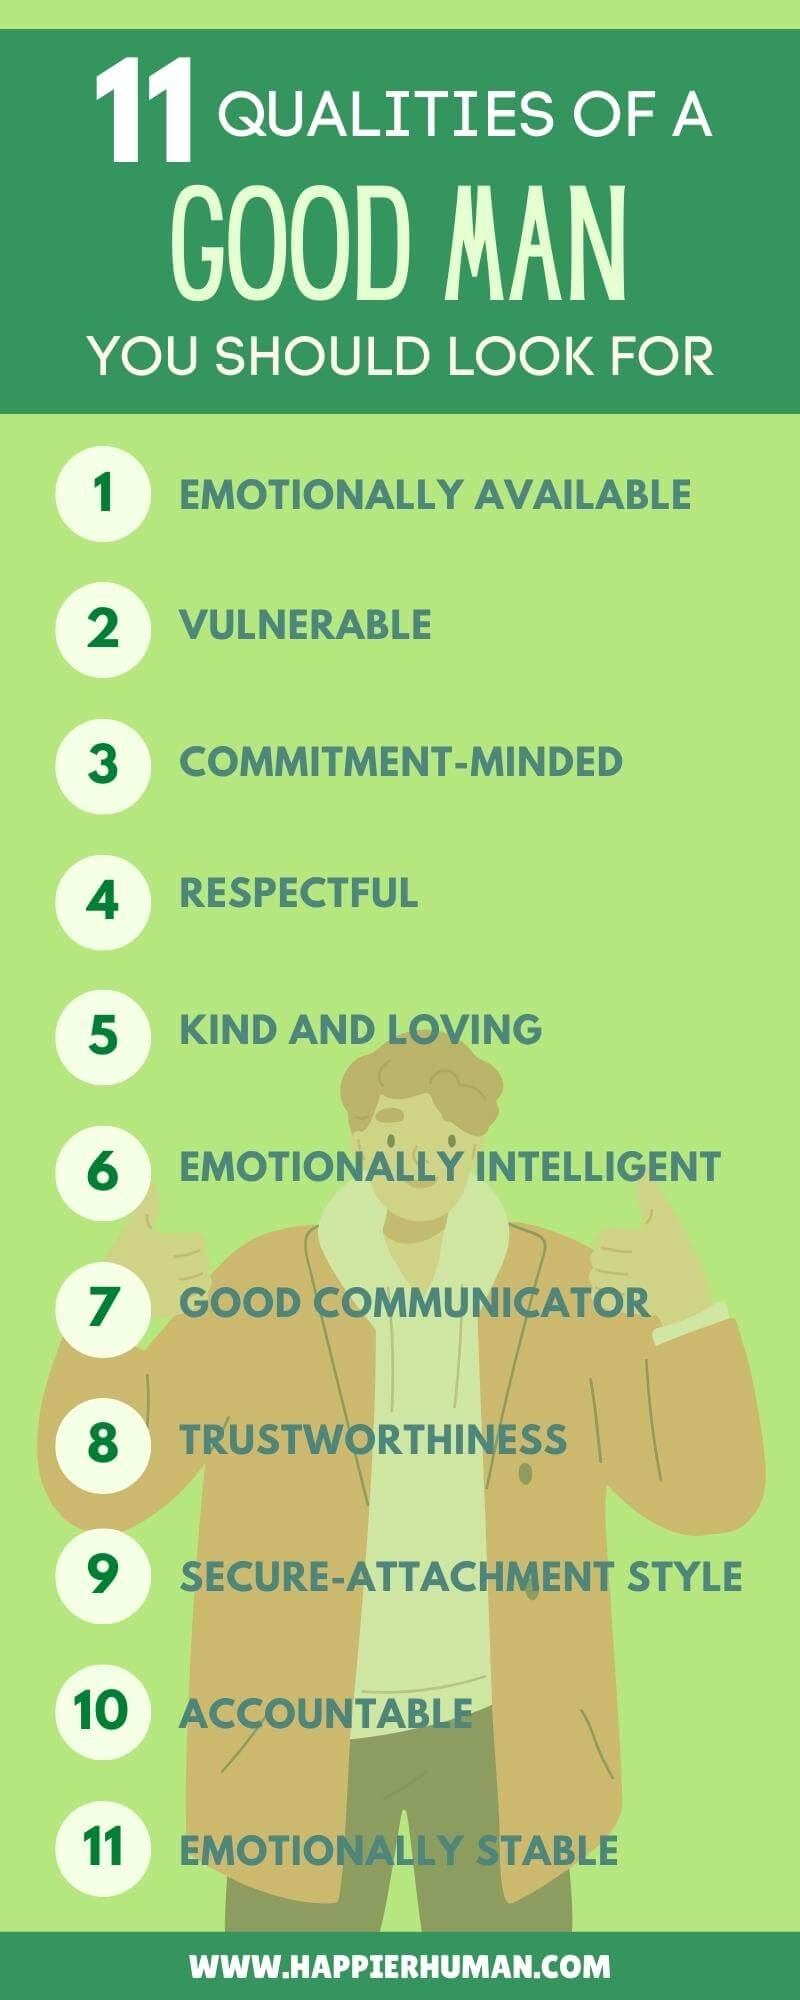 Qualities Good Man Infographic 